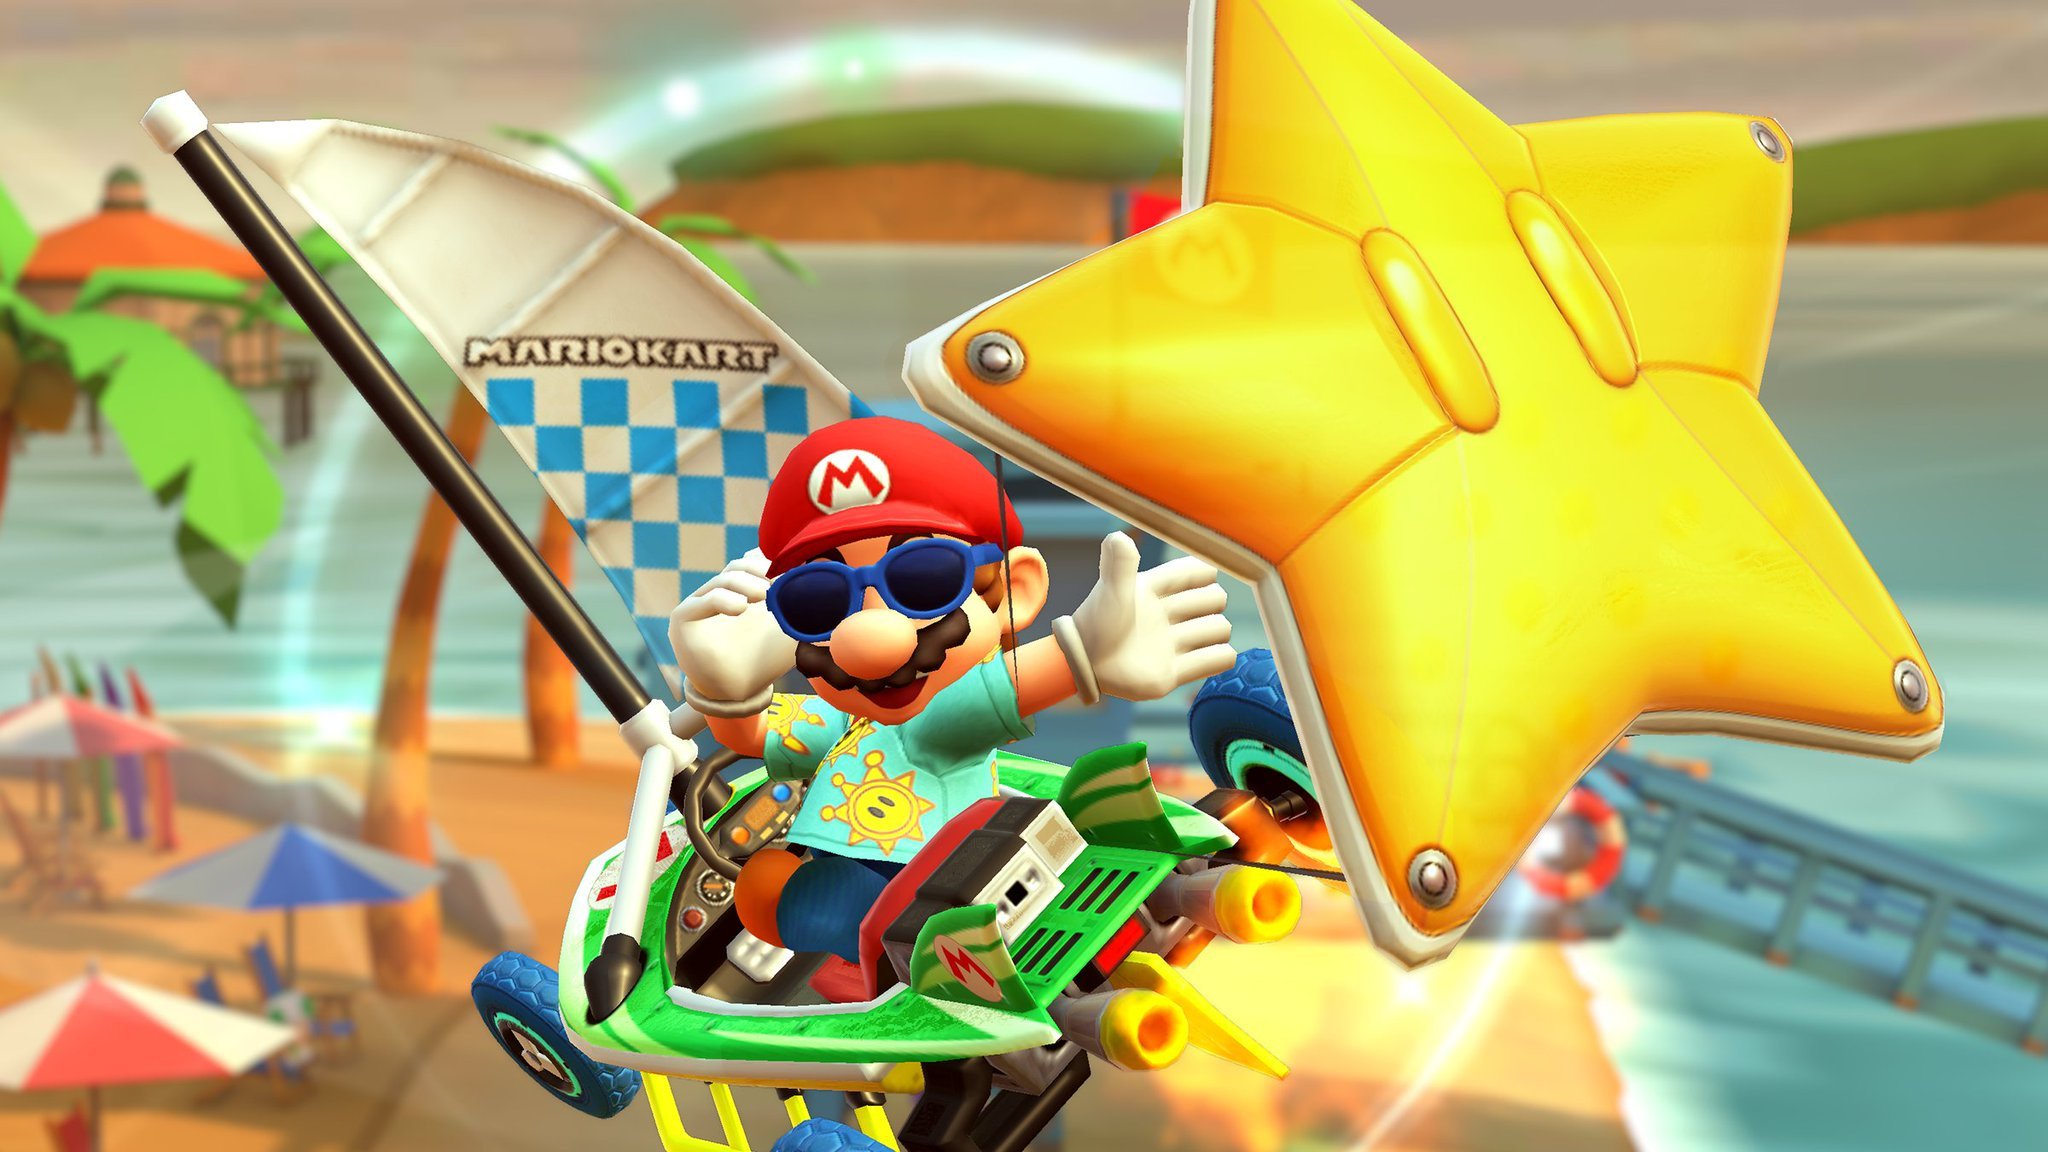 Mario Kart 8 - Tips and Tricks to Online Success - Mii-Gamer - Nintendo